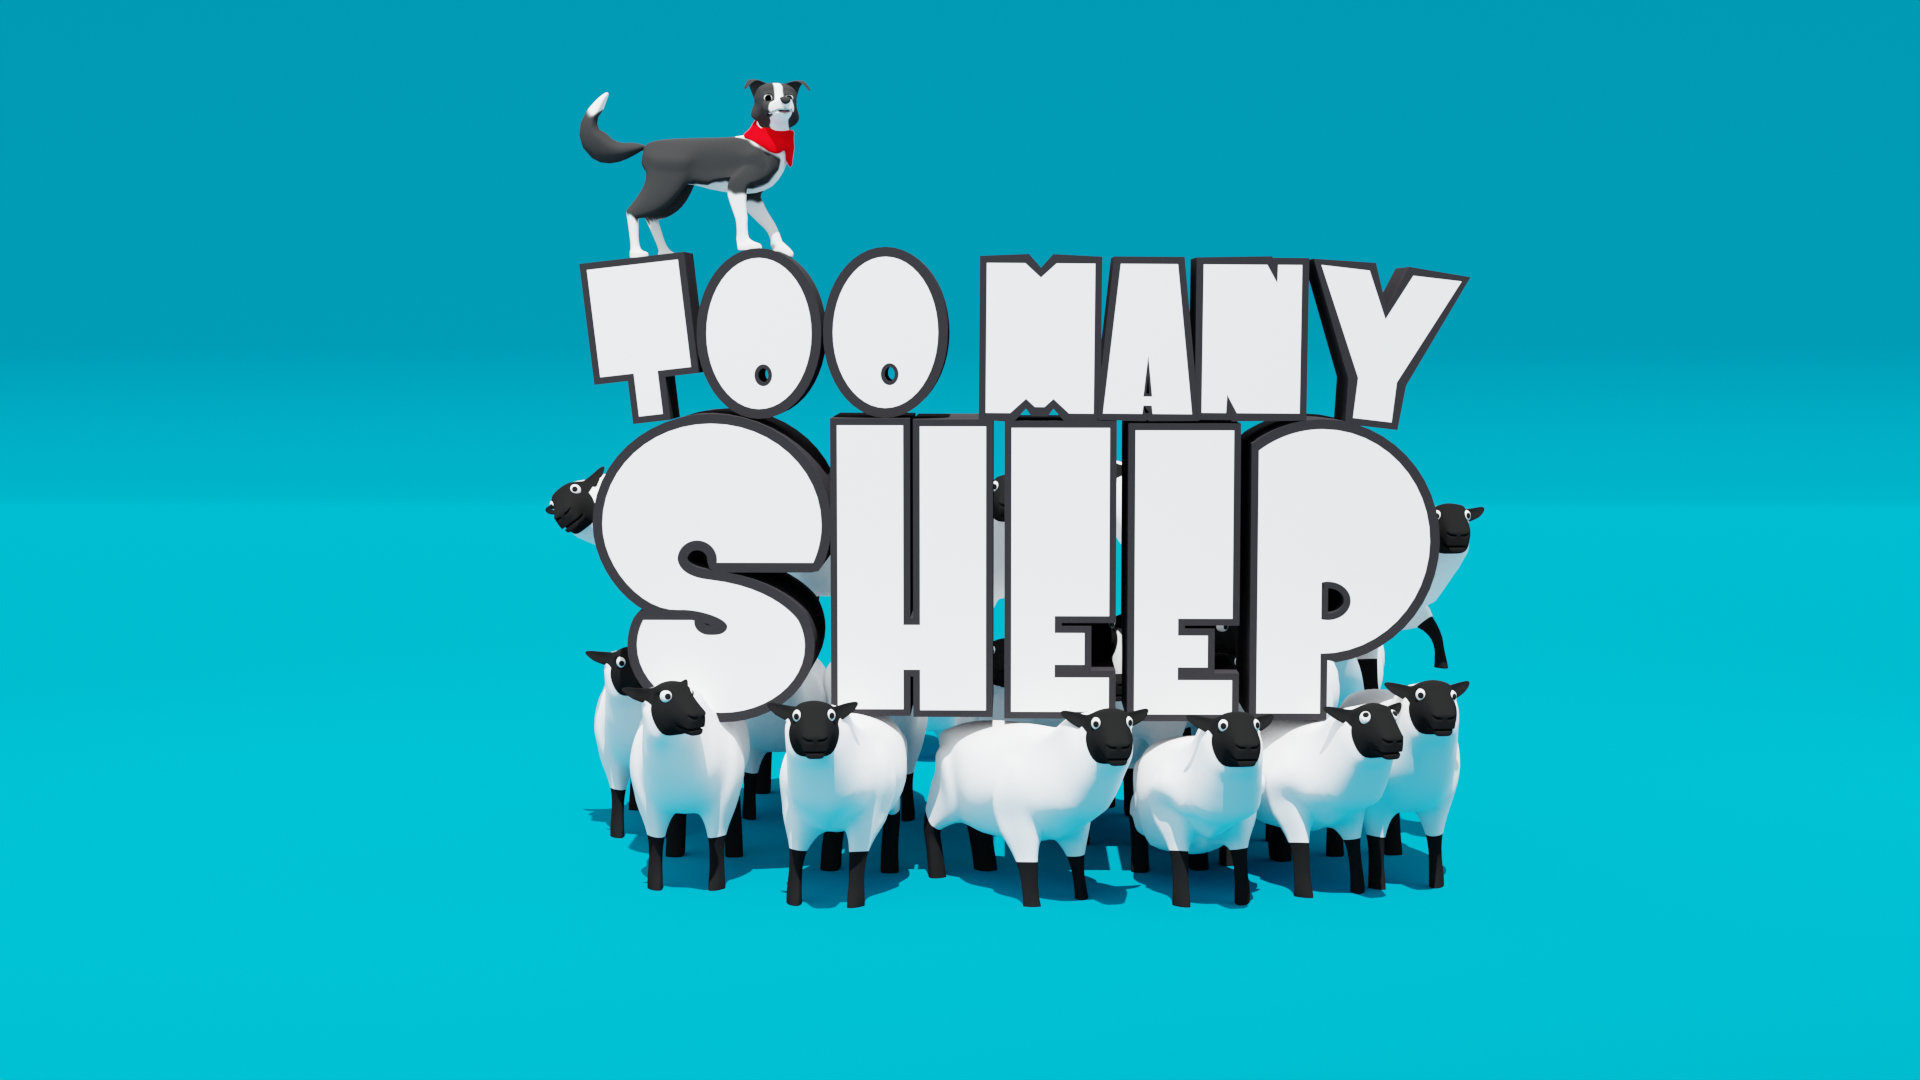 Too Many Sheep